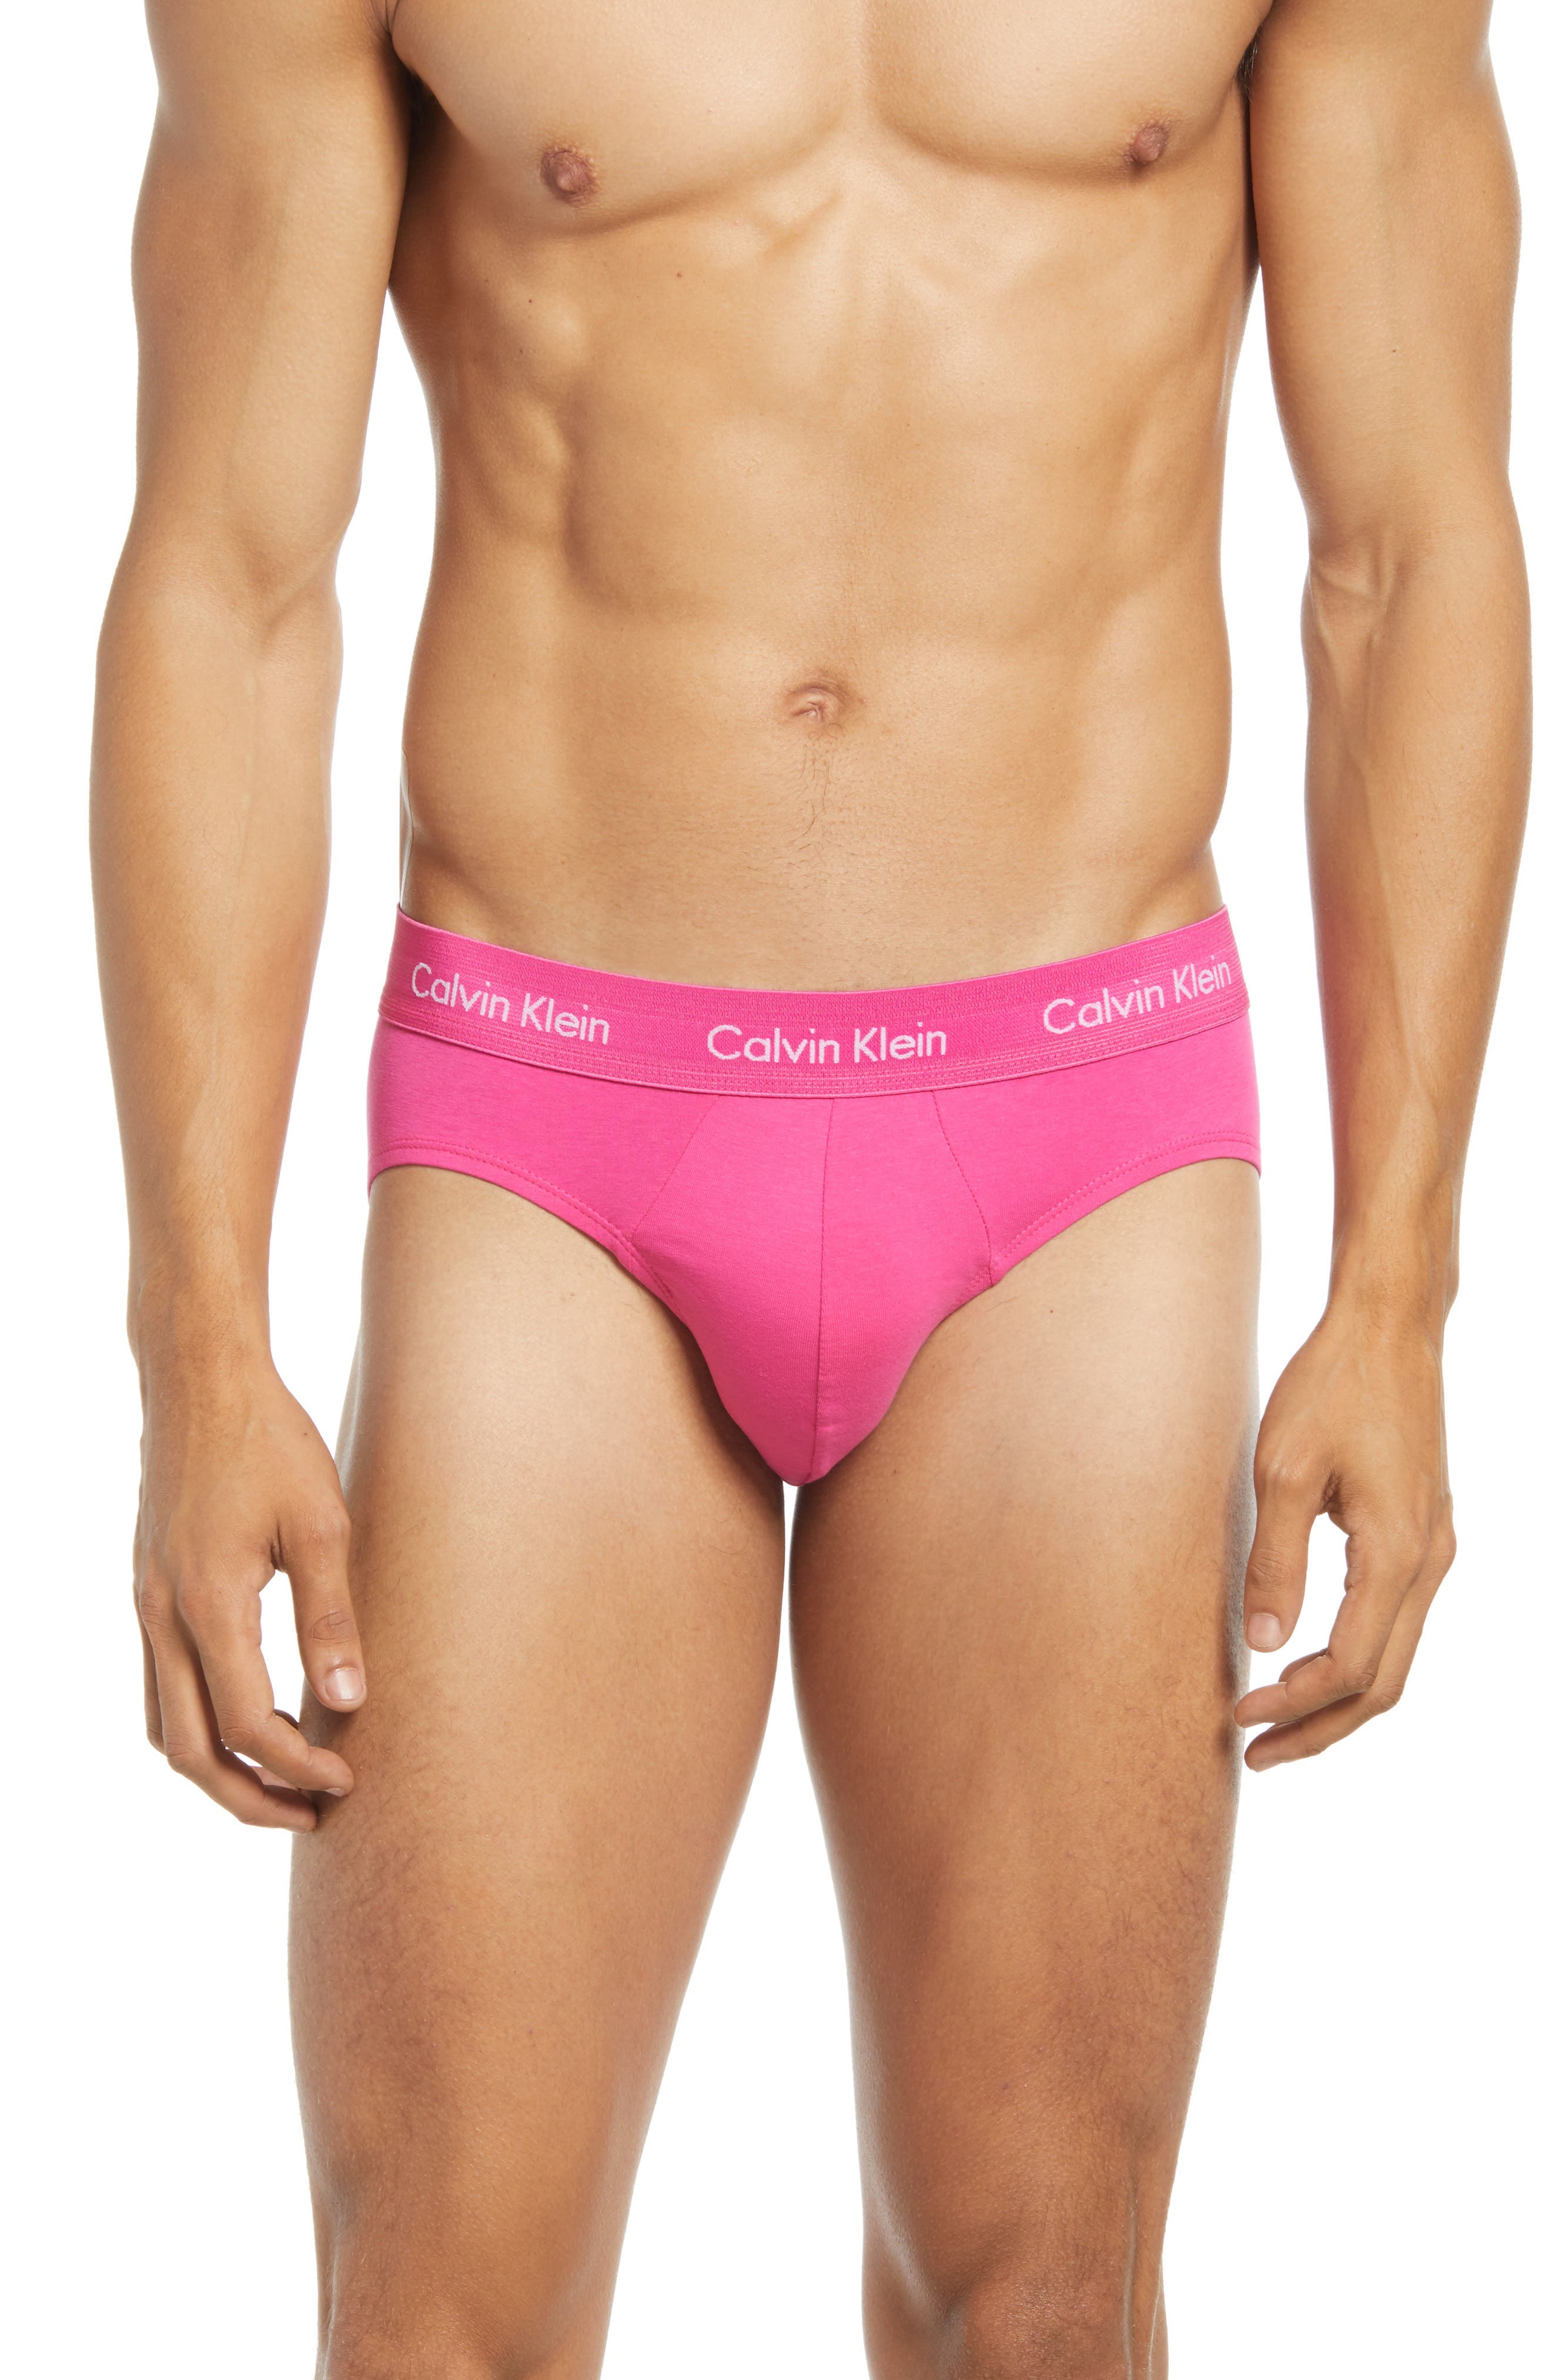 UPC 790812537749 product image for Men's Calvin Klein Assorted 5-Pack Pride Edit Briefs, Size Large - Pink | upcitemdb.com